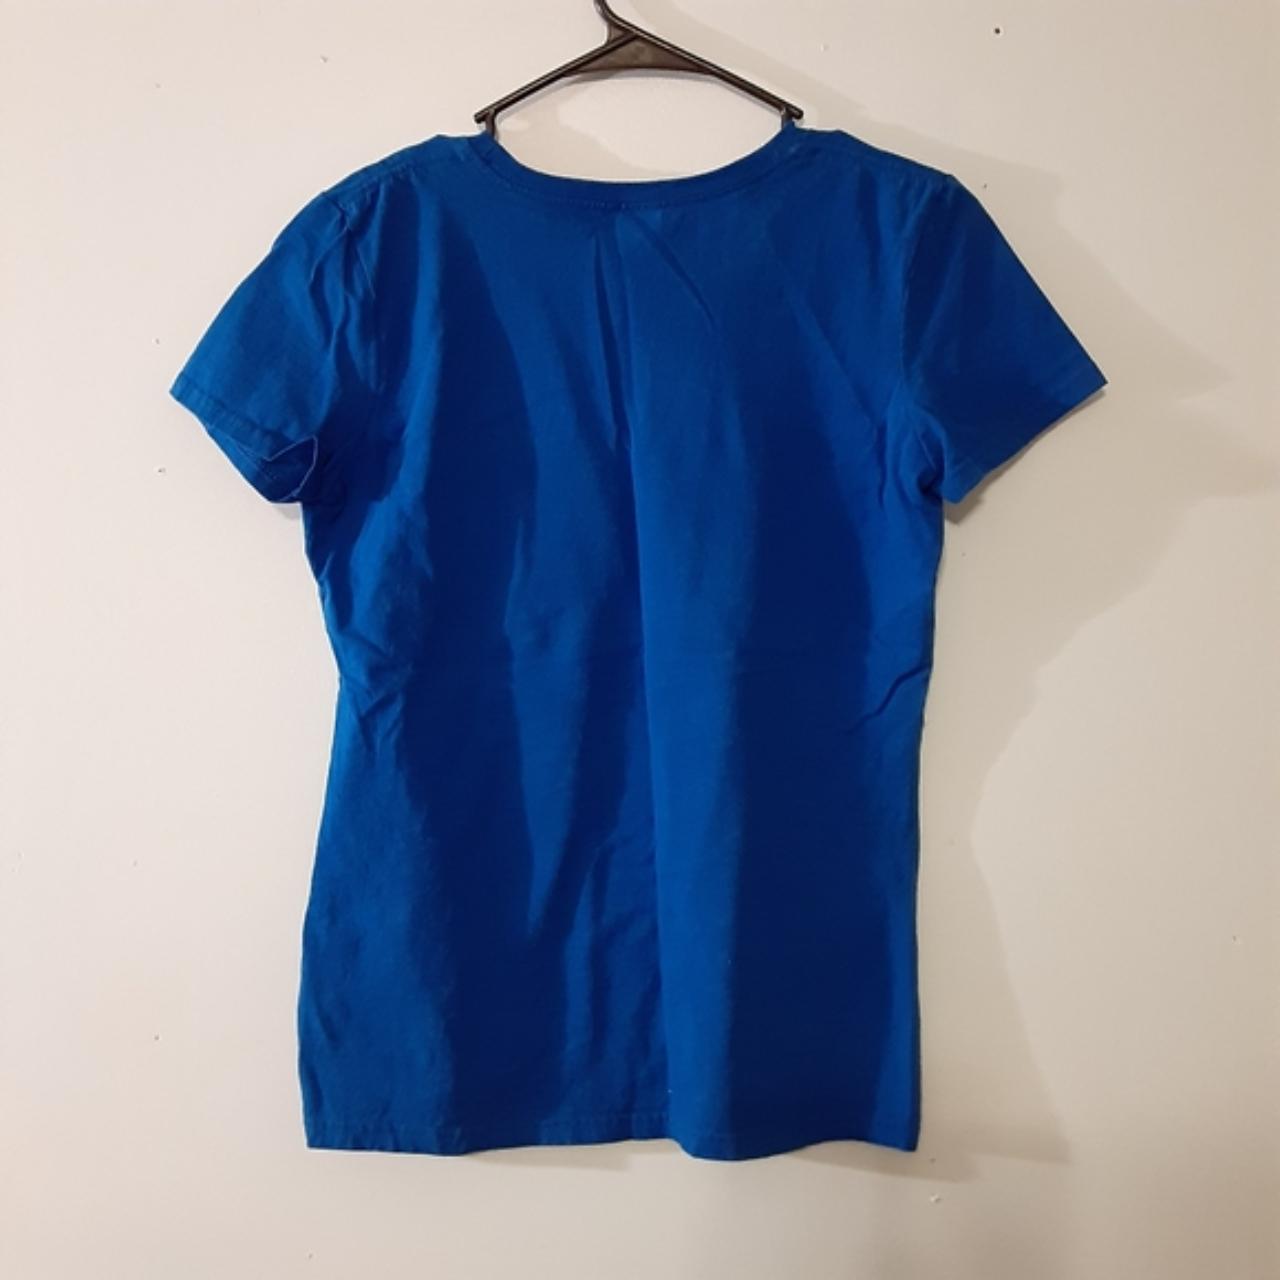 Women's Blue and White T-shirt (4)